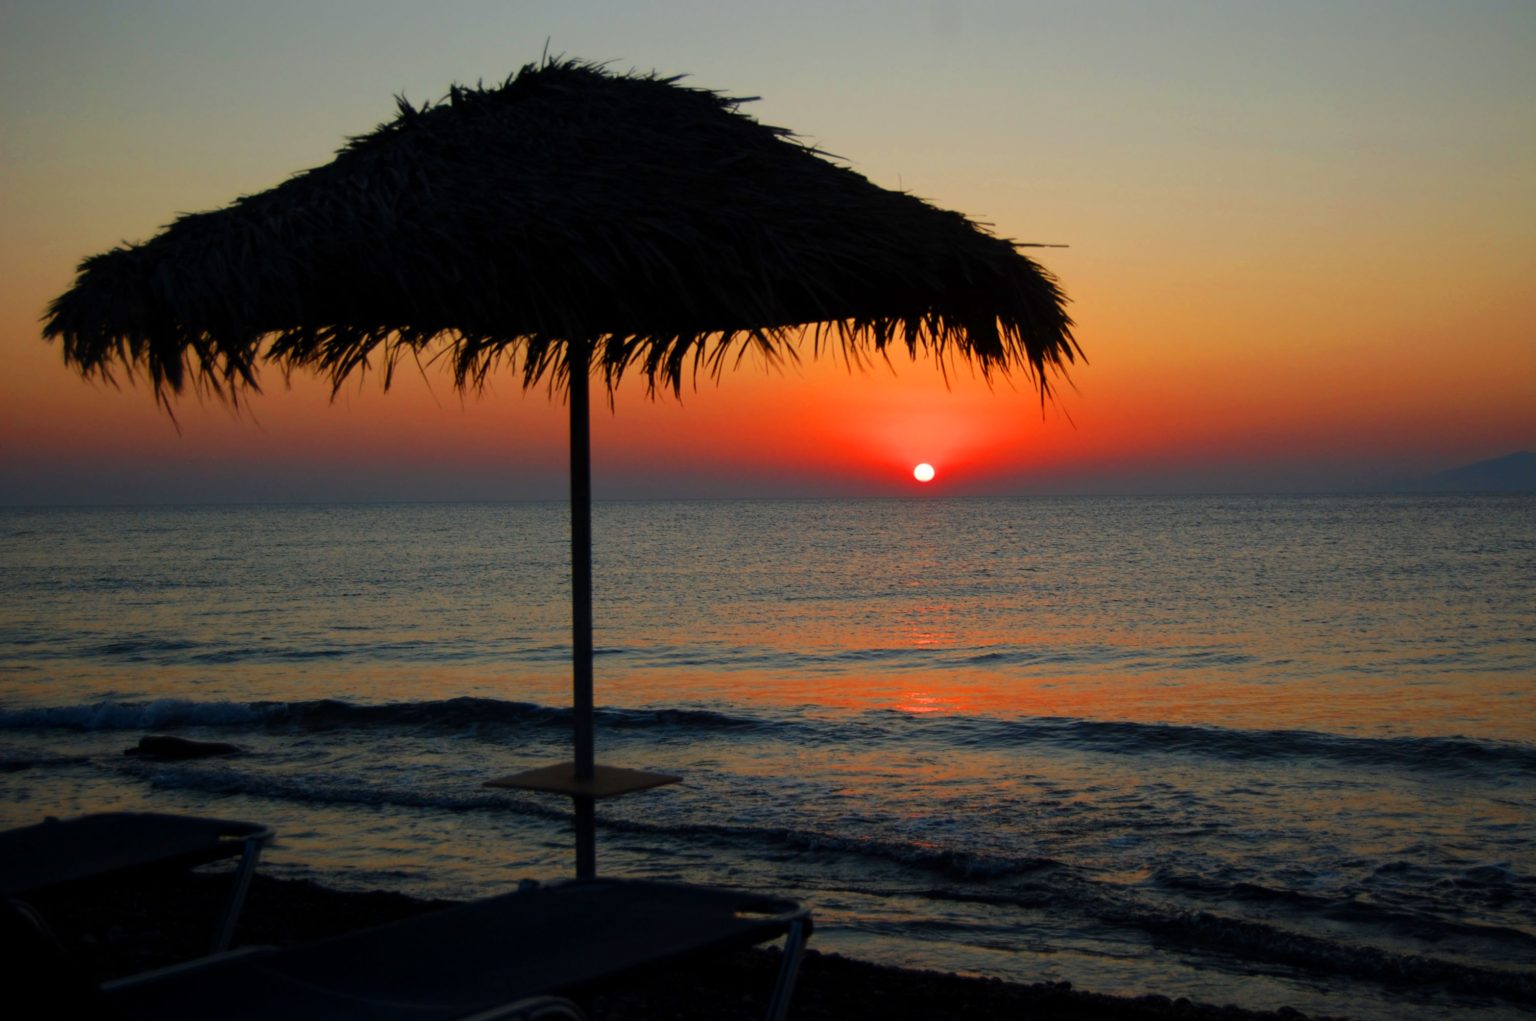 A wonderful sunset in Greece